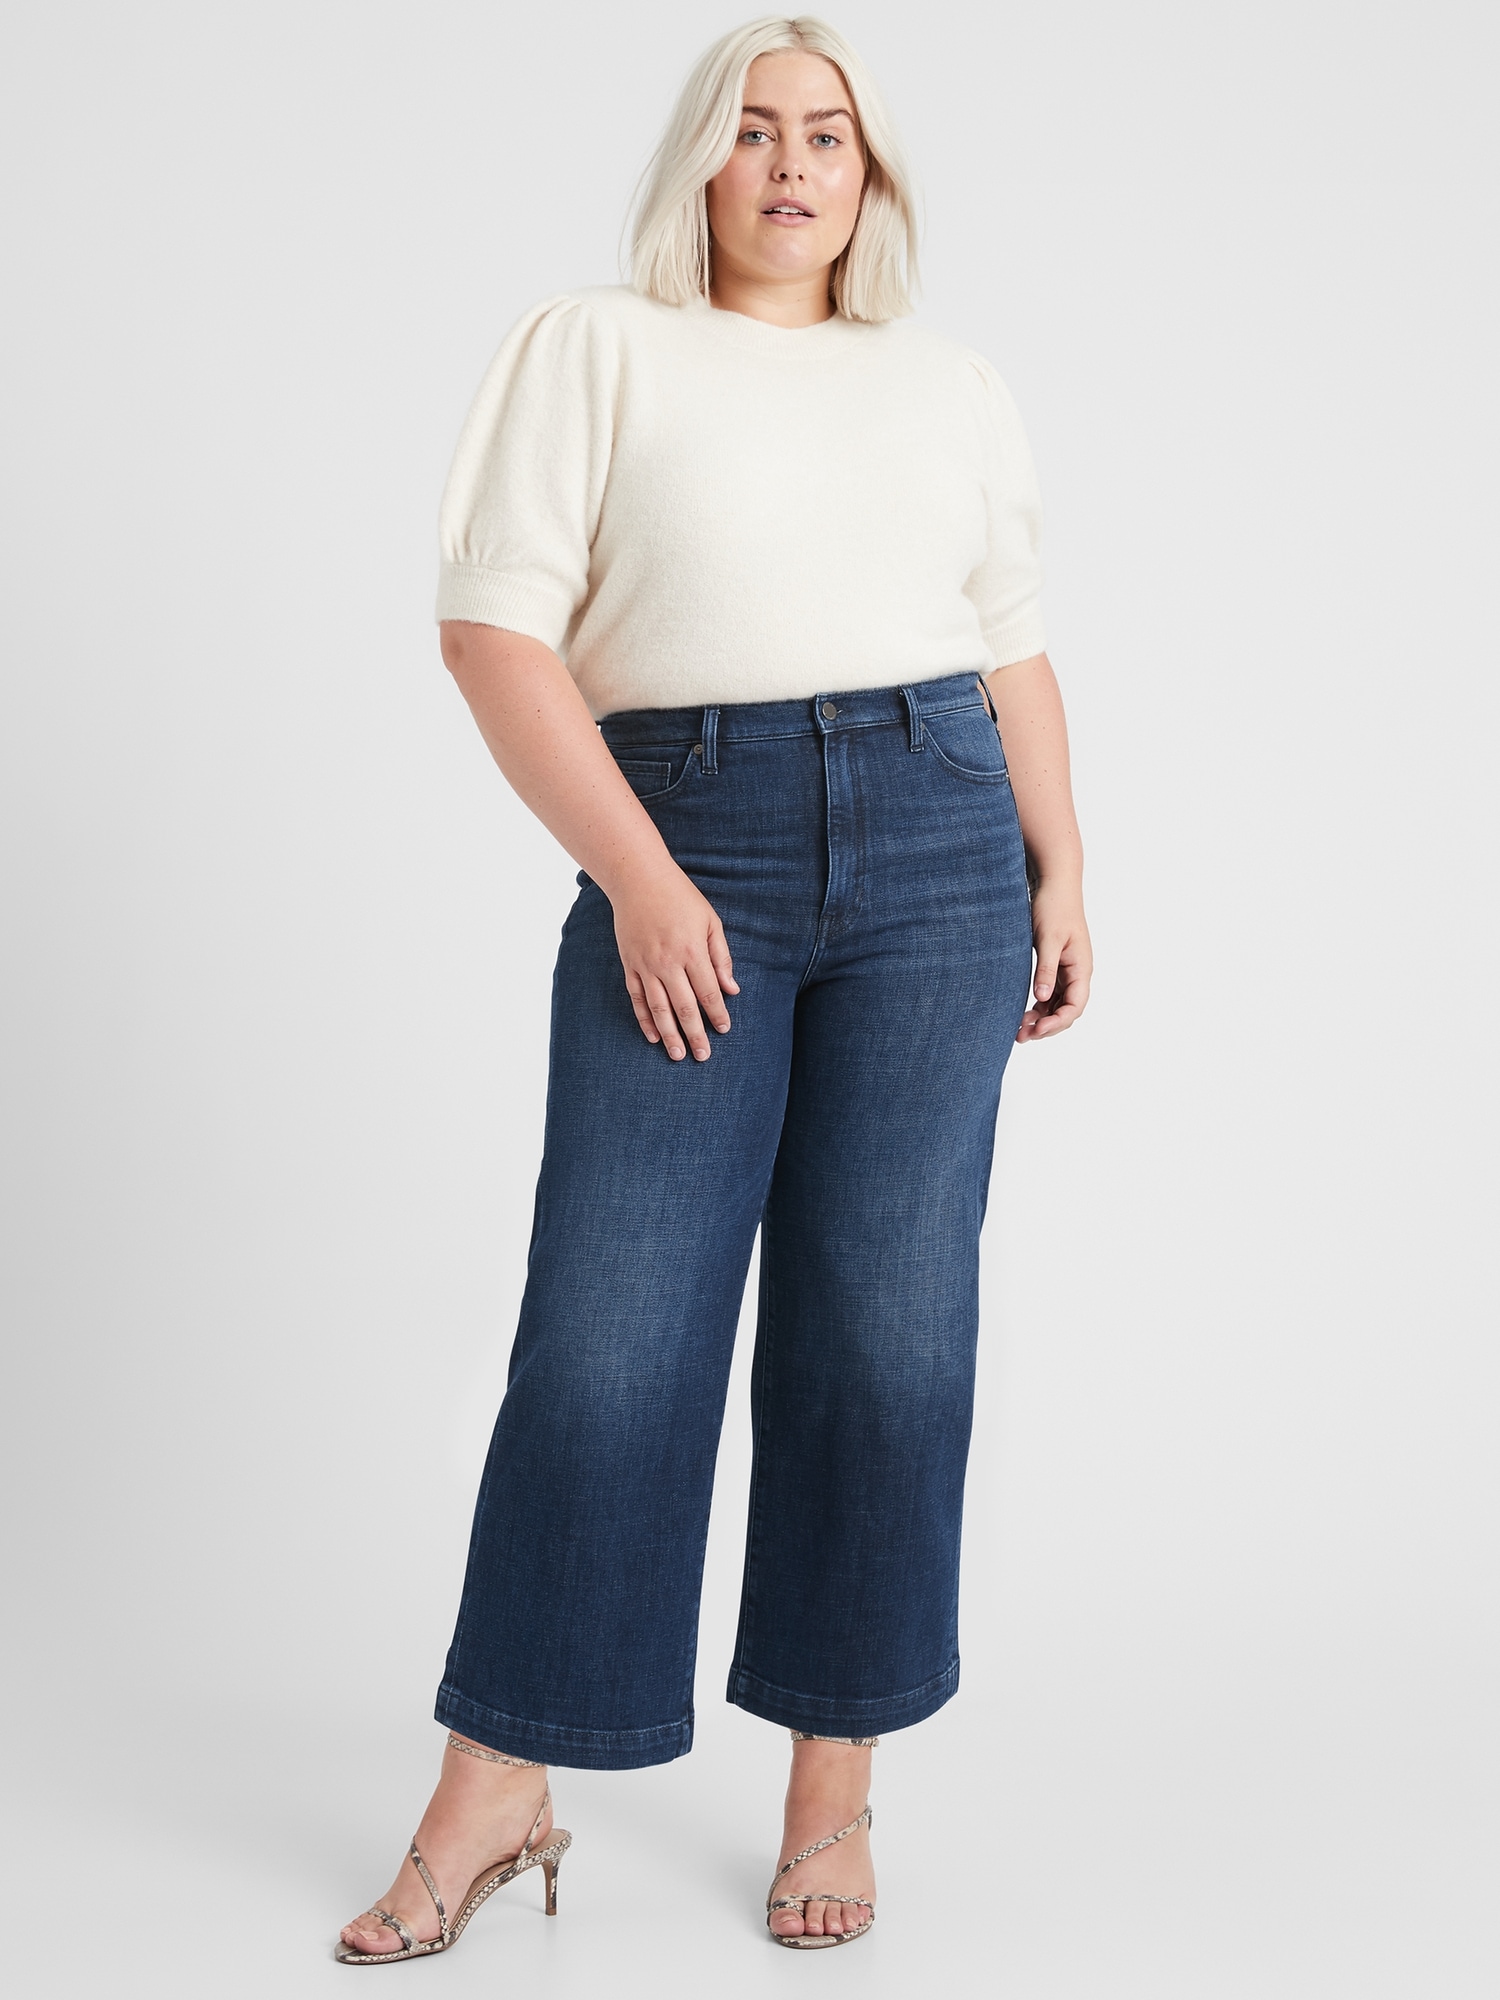 The Wide-Leg Crop Jean